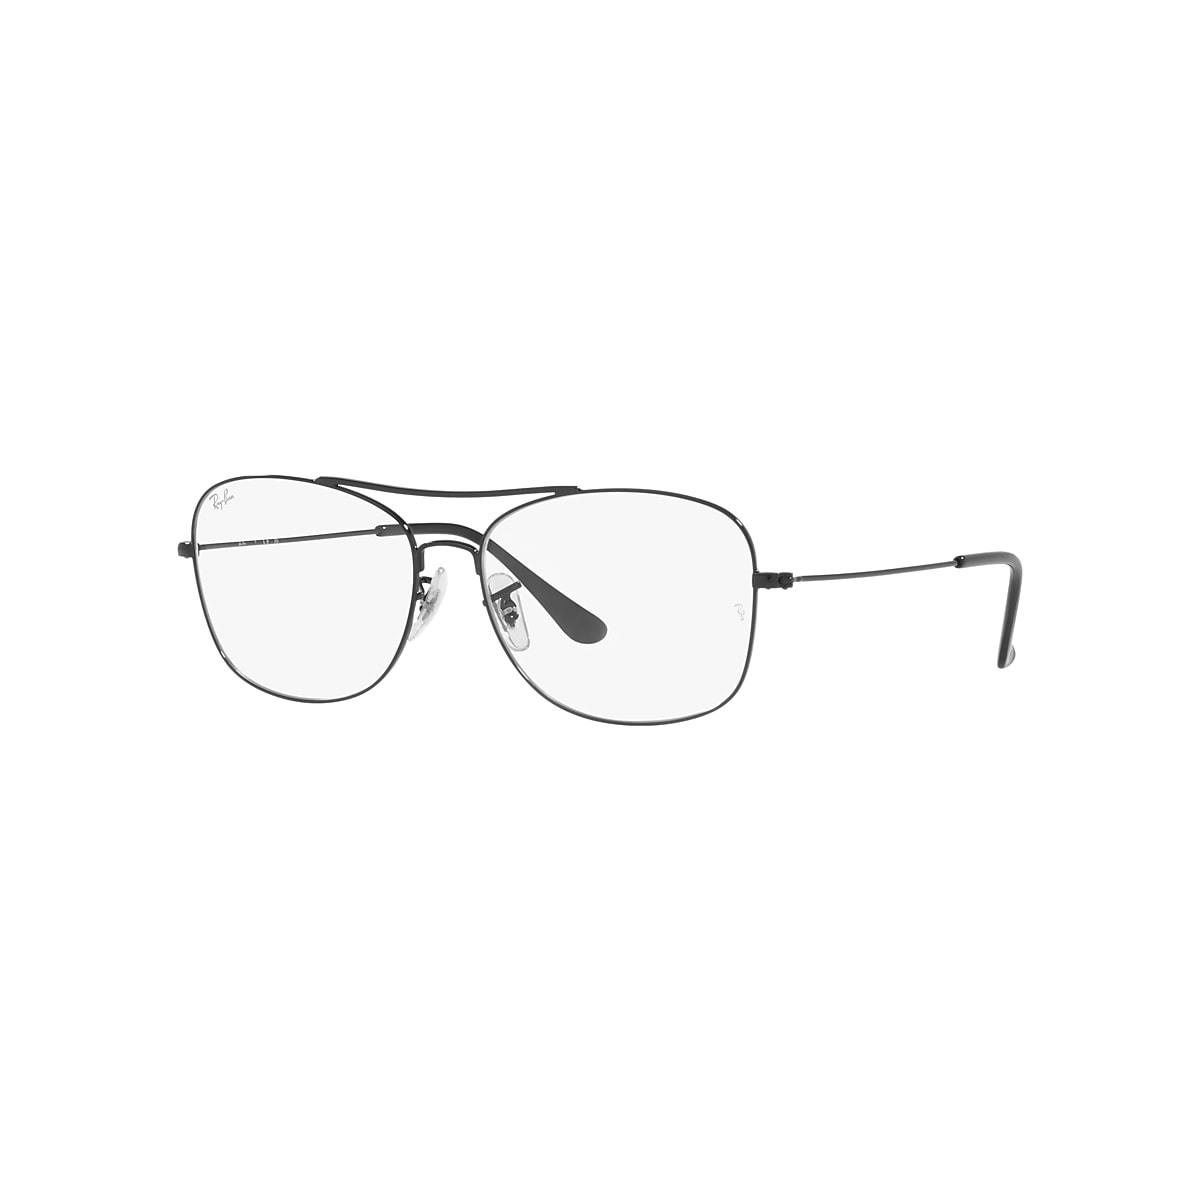 RB6499 OPTICS Eyeglasses with Black Frame - RB6499 | Ray-Ban® EU